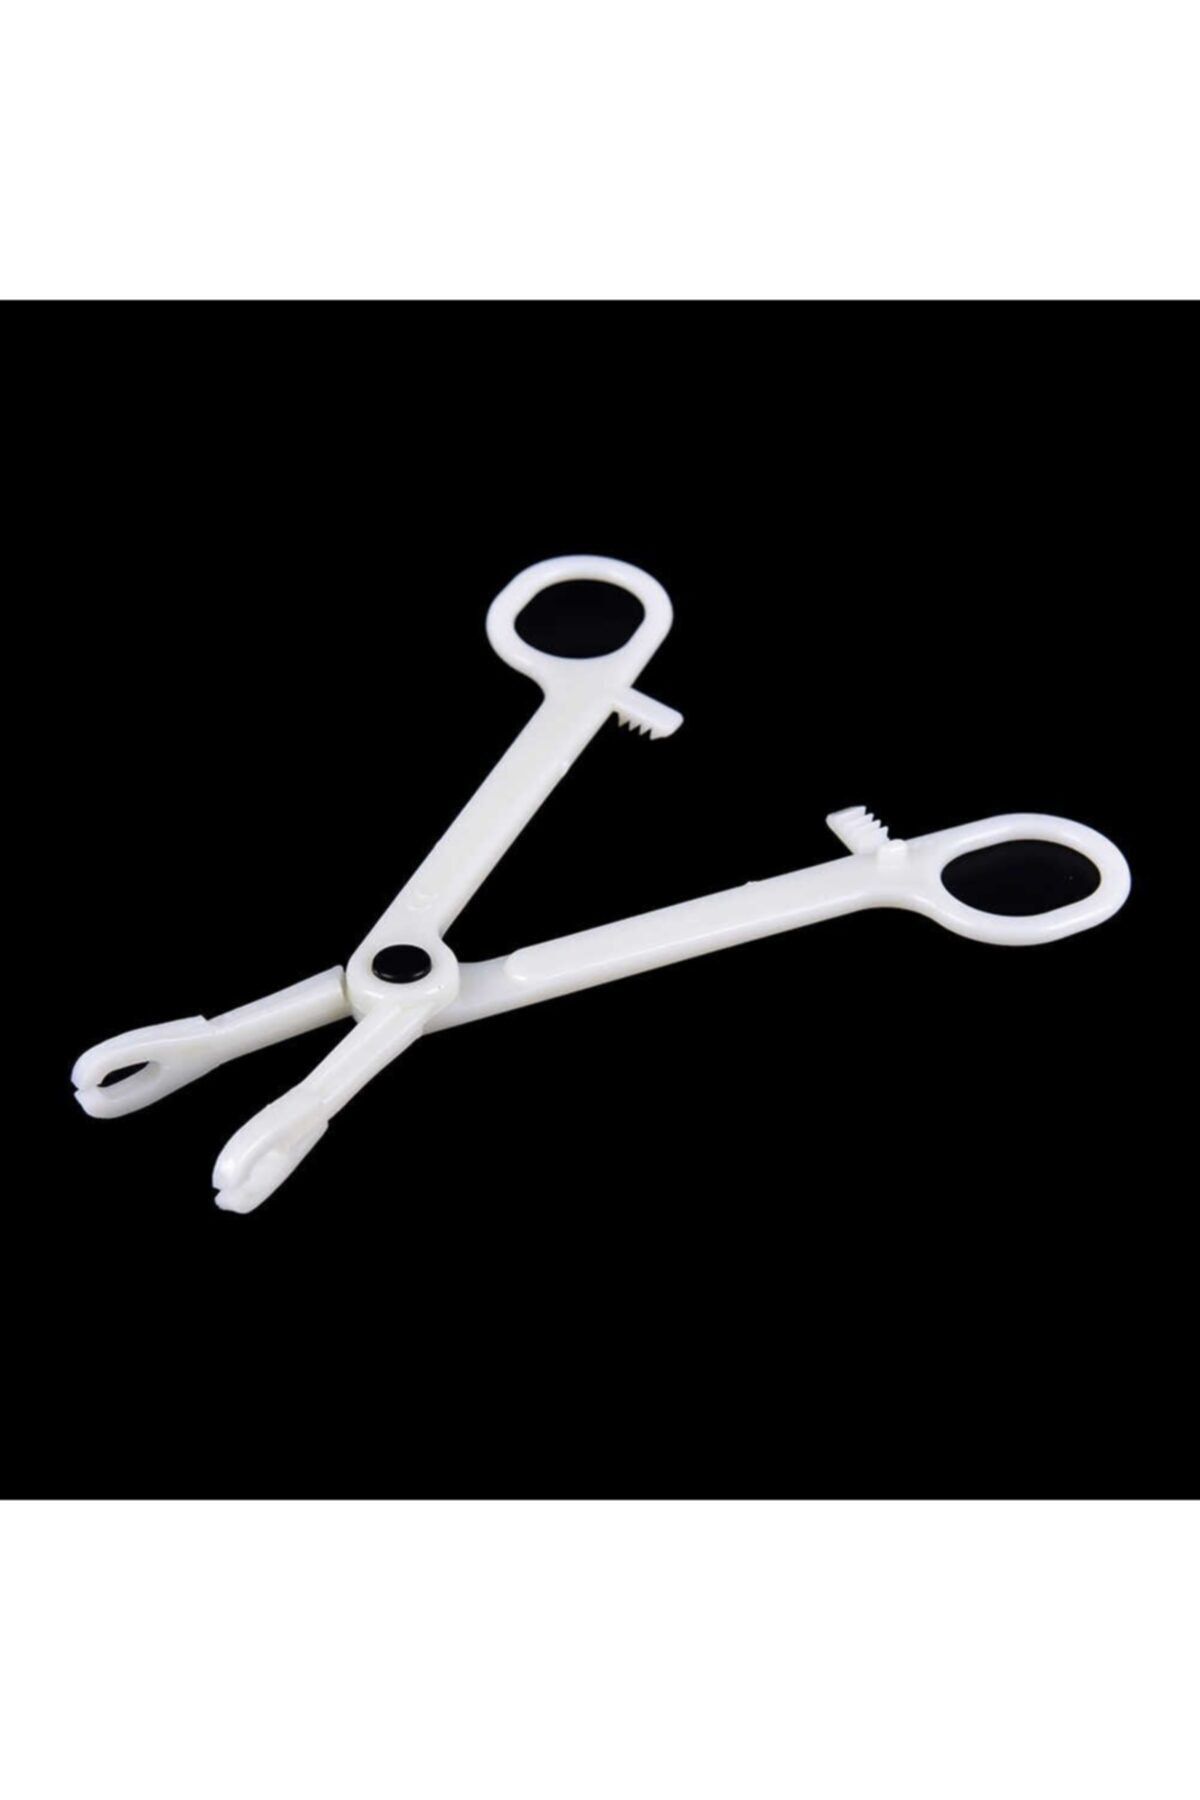 XLINETATTOO Steril Paket Pıercıng Pens Üçgen Makası Piercing